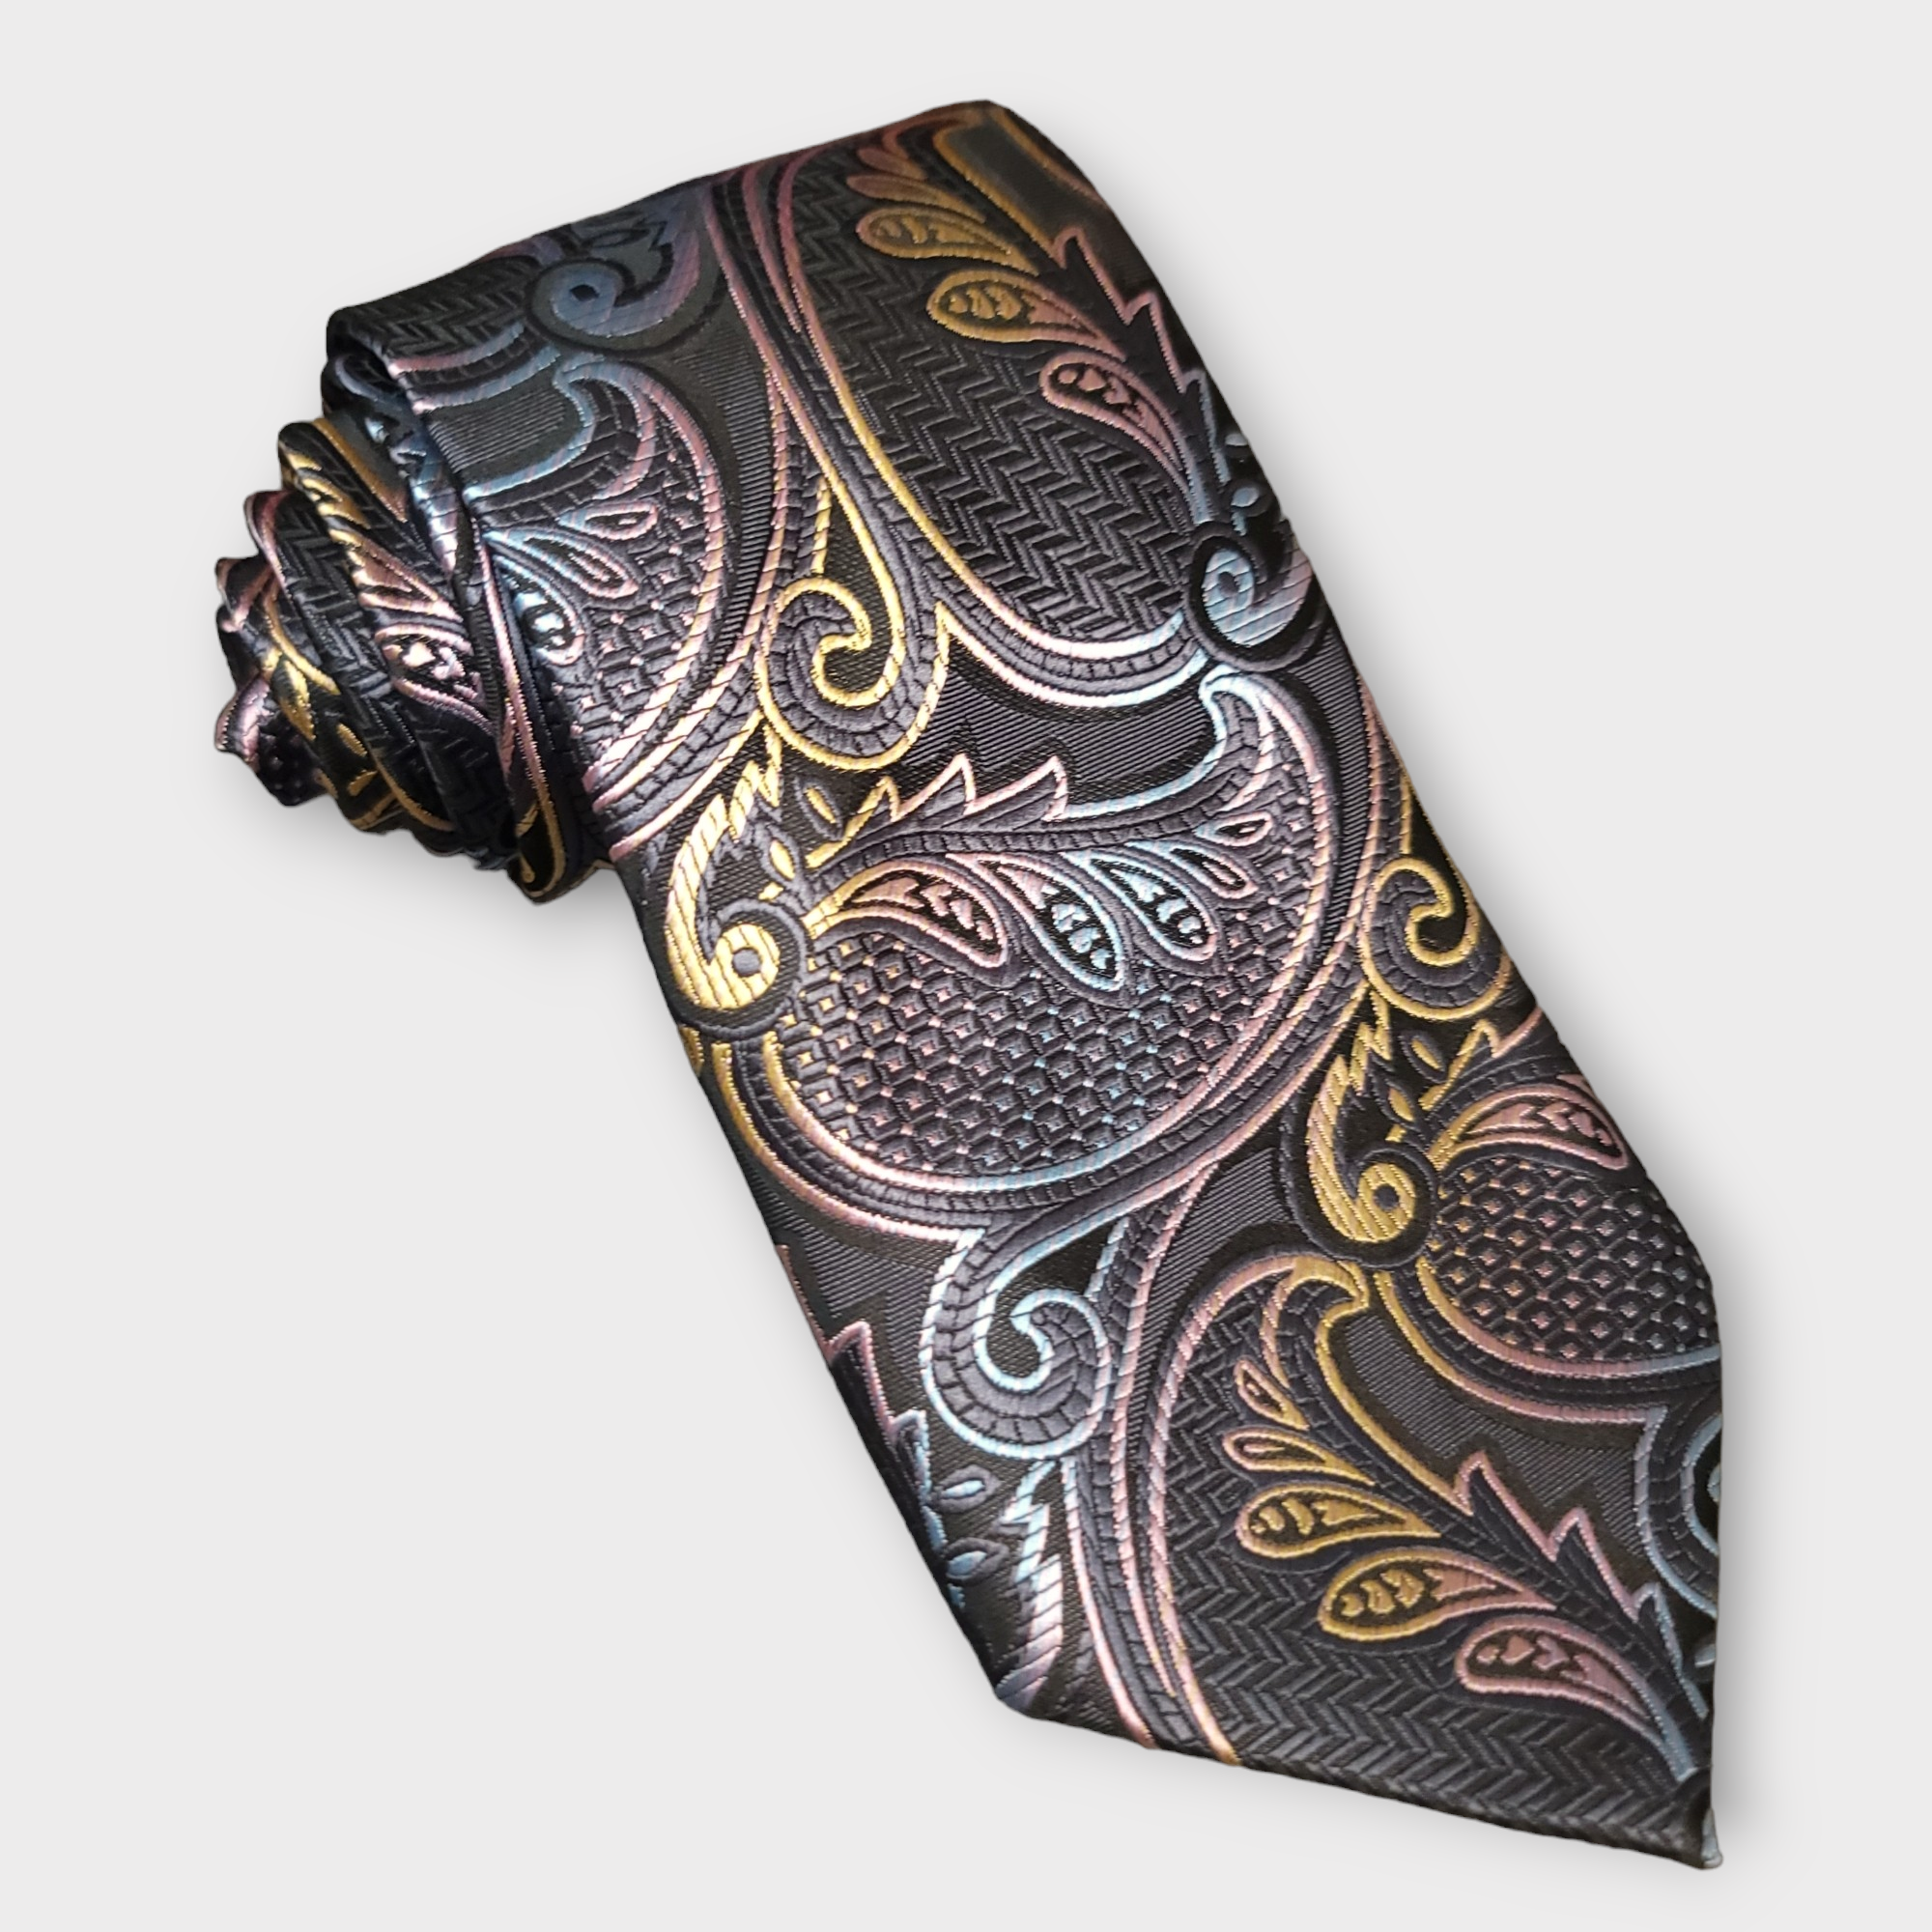 Gray Paisley Tie Hanky Cufflinks Set 100% Silk